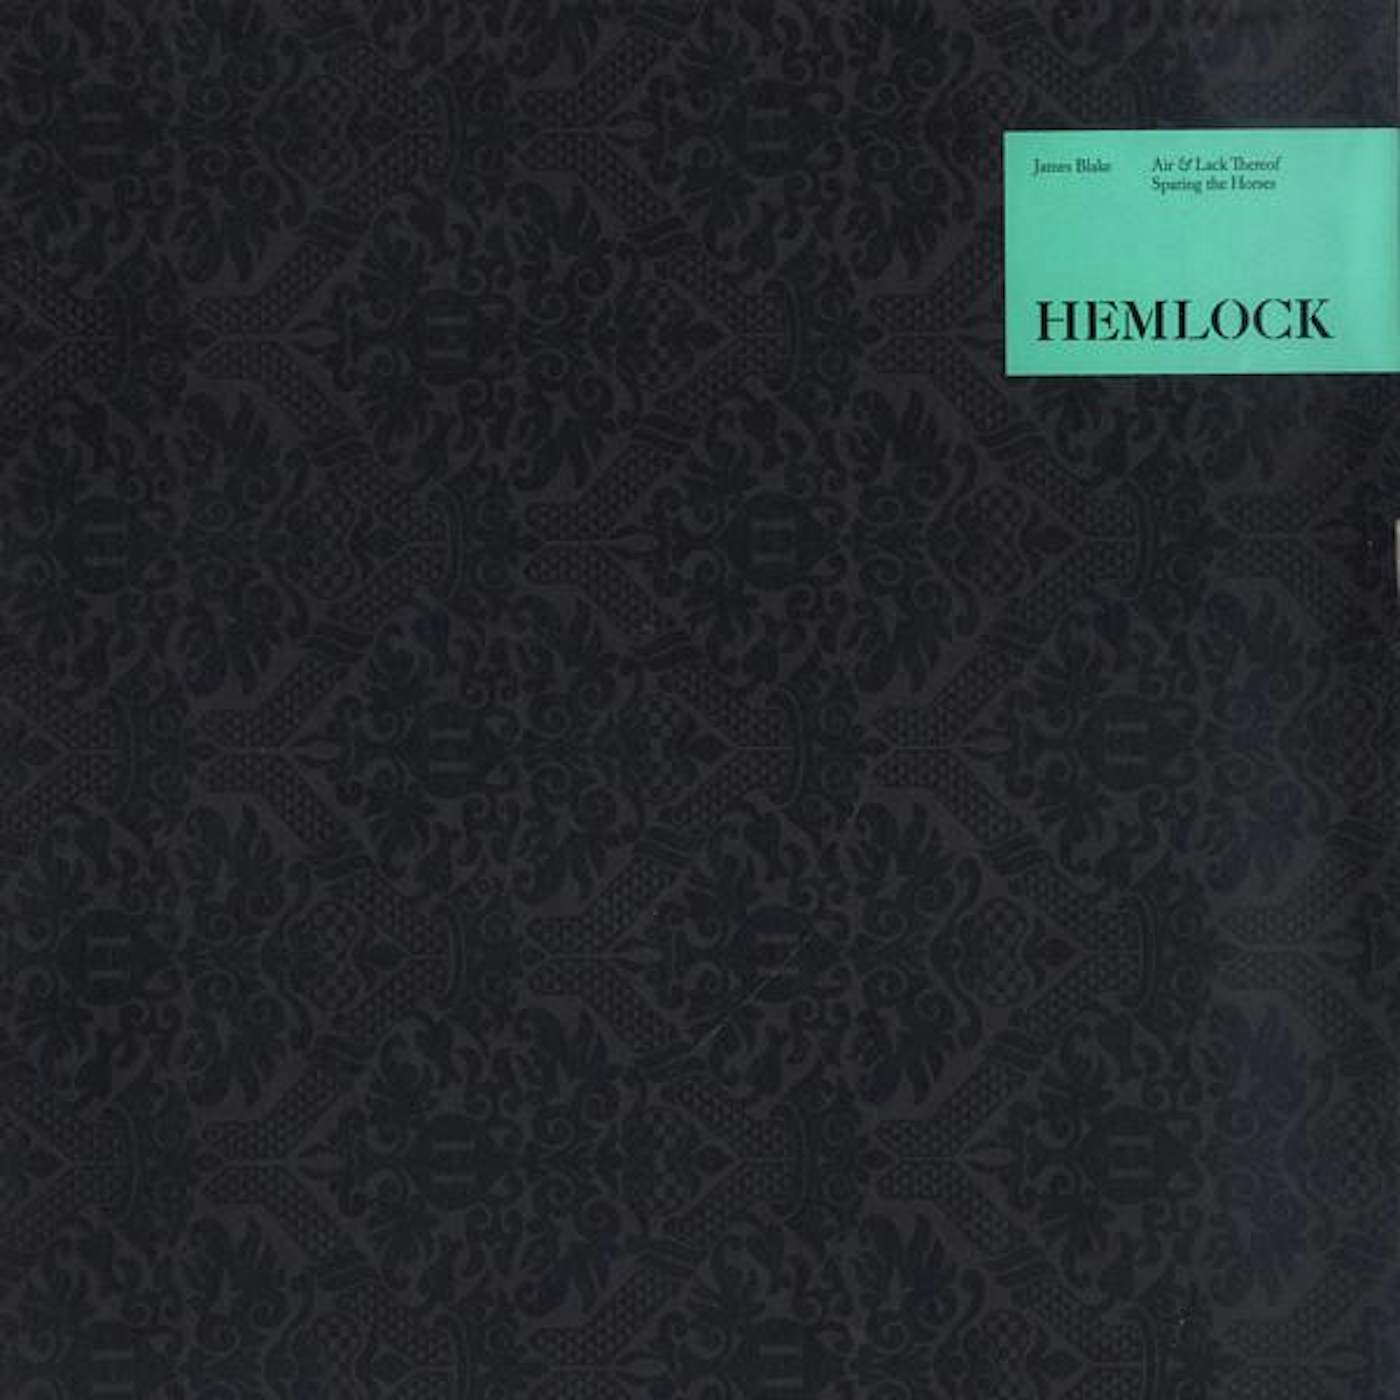 James Blake AIR & LACK THEREOF Vinyl Record - UK Release